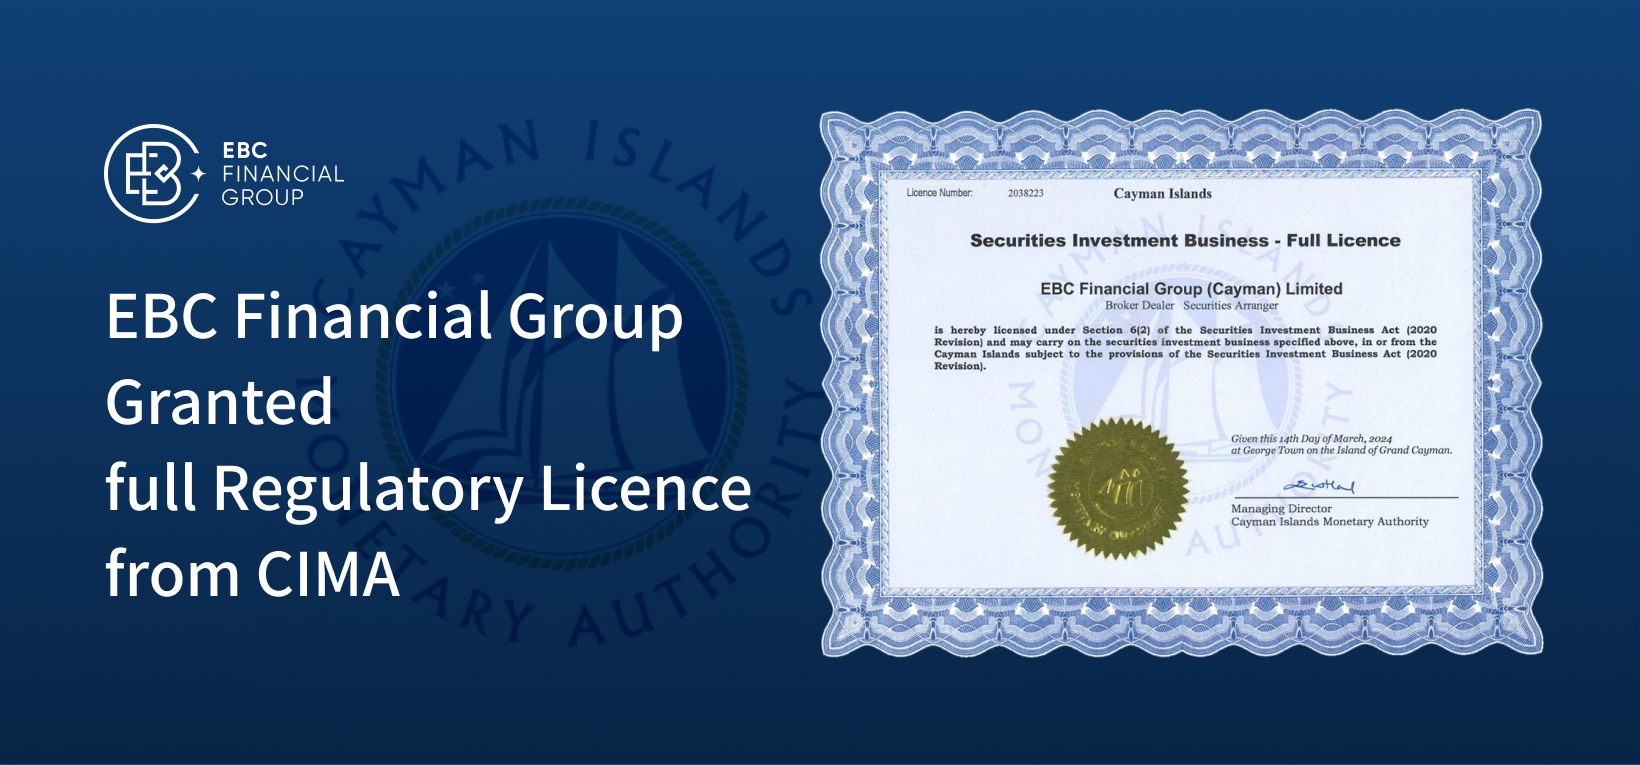 EBC 金融集團獲得了開曼群島貨幣管理局 (CIMA) 頒發的全面監管許可證